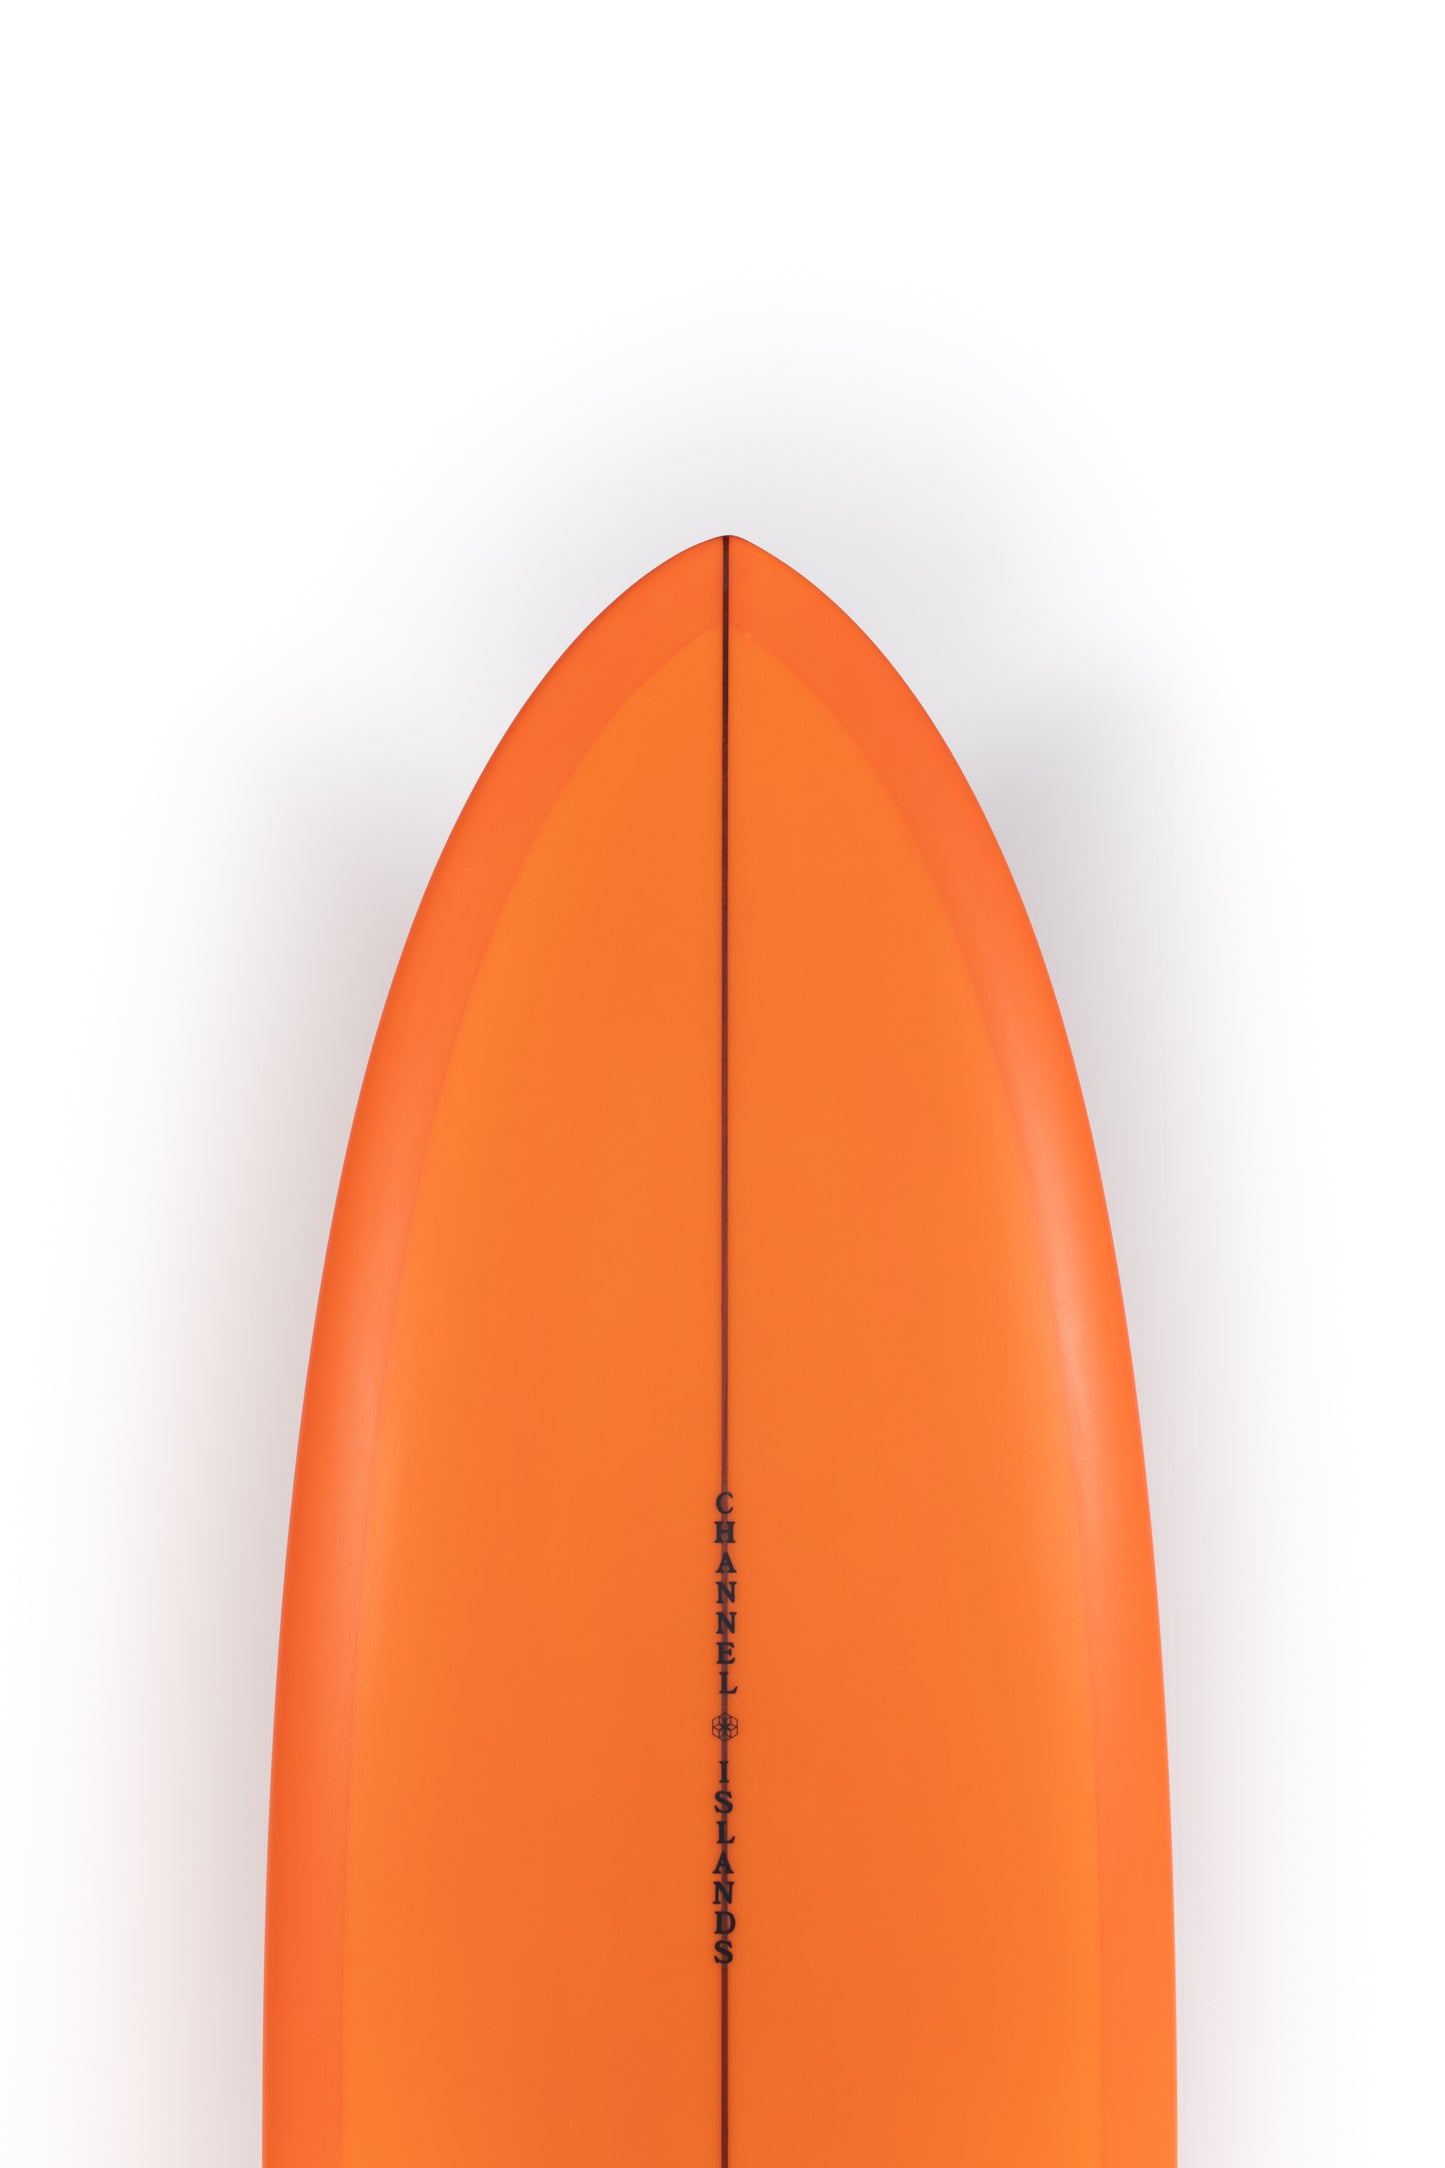 
                  
                    Pukas Surf Shop - Channel Islands - CI MID TWIN - 6'3" x 20 3/4 x 2 5/8 - 37,5L - CI26873
                  
                